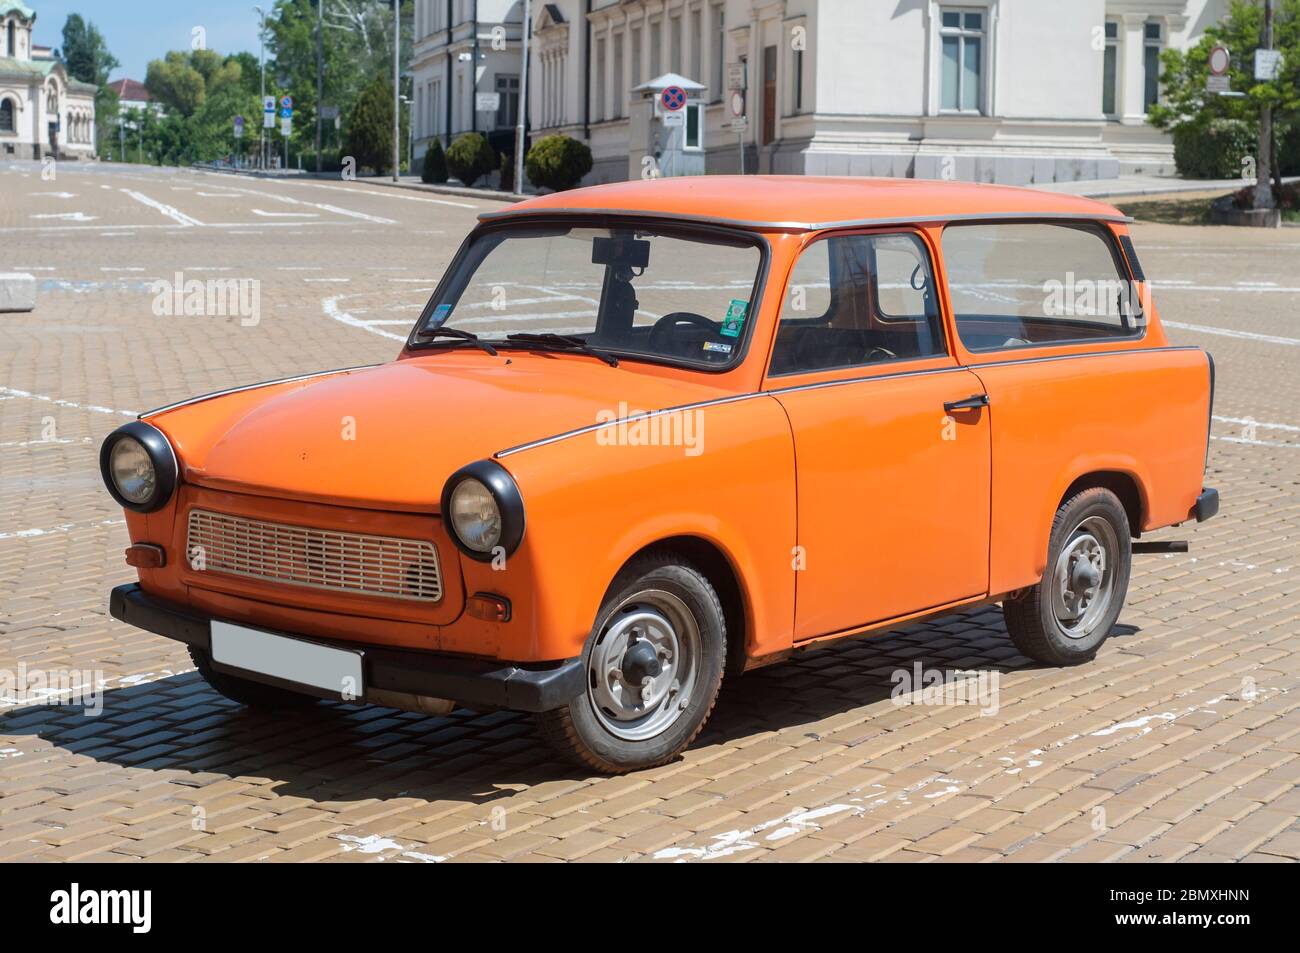 Orange colored vintage restored Trabant car on paved street Stock Photo